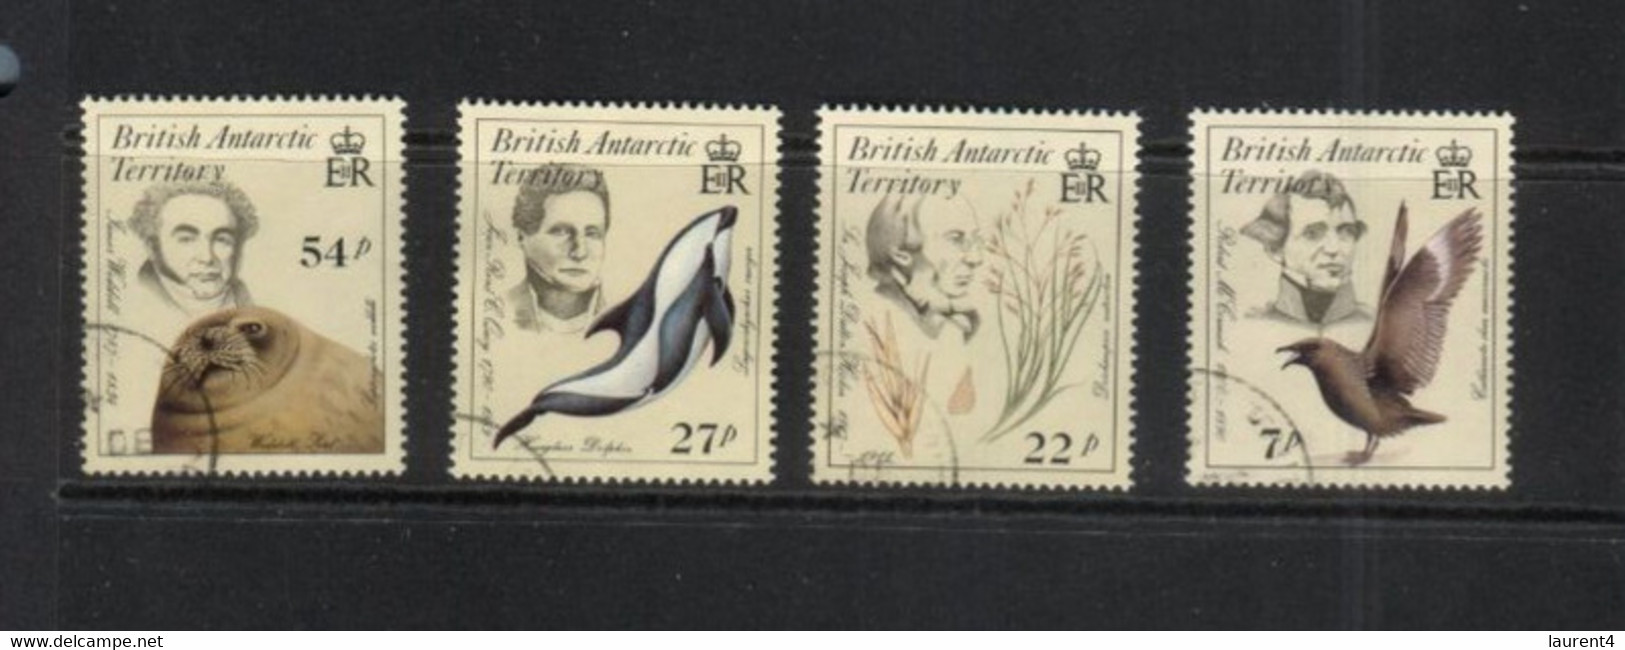 (8-10-2020) British Antarctic Territory - 4 Used Stamps  (Explorer) - Gebraucht